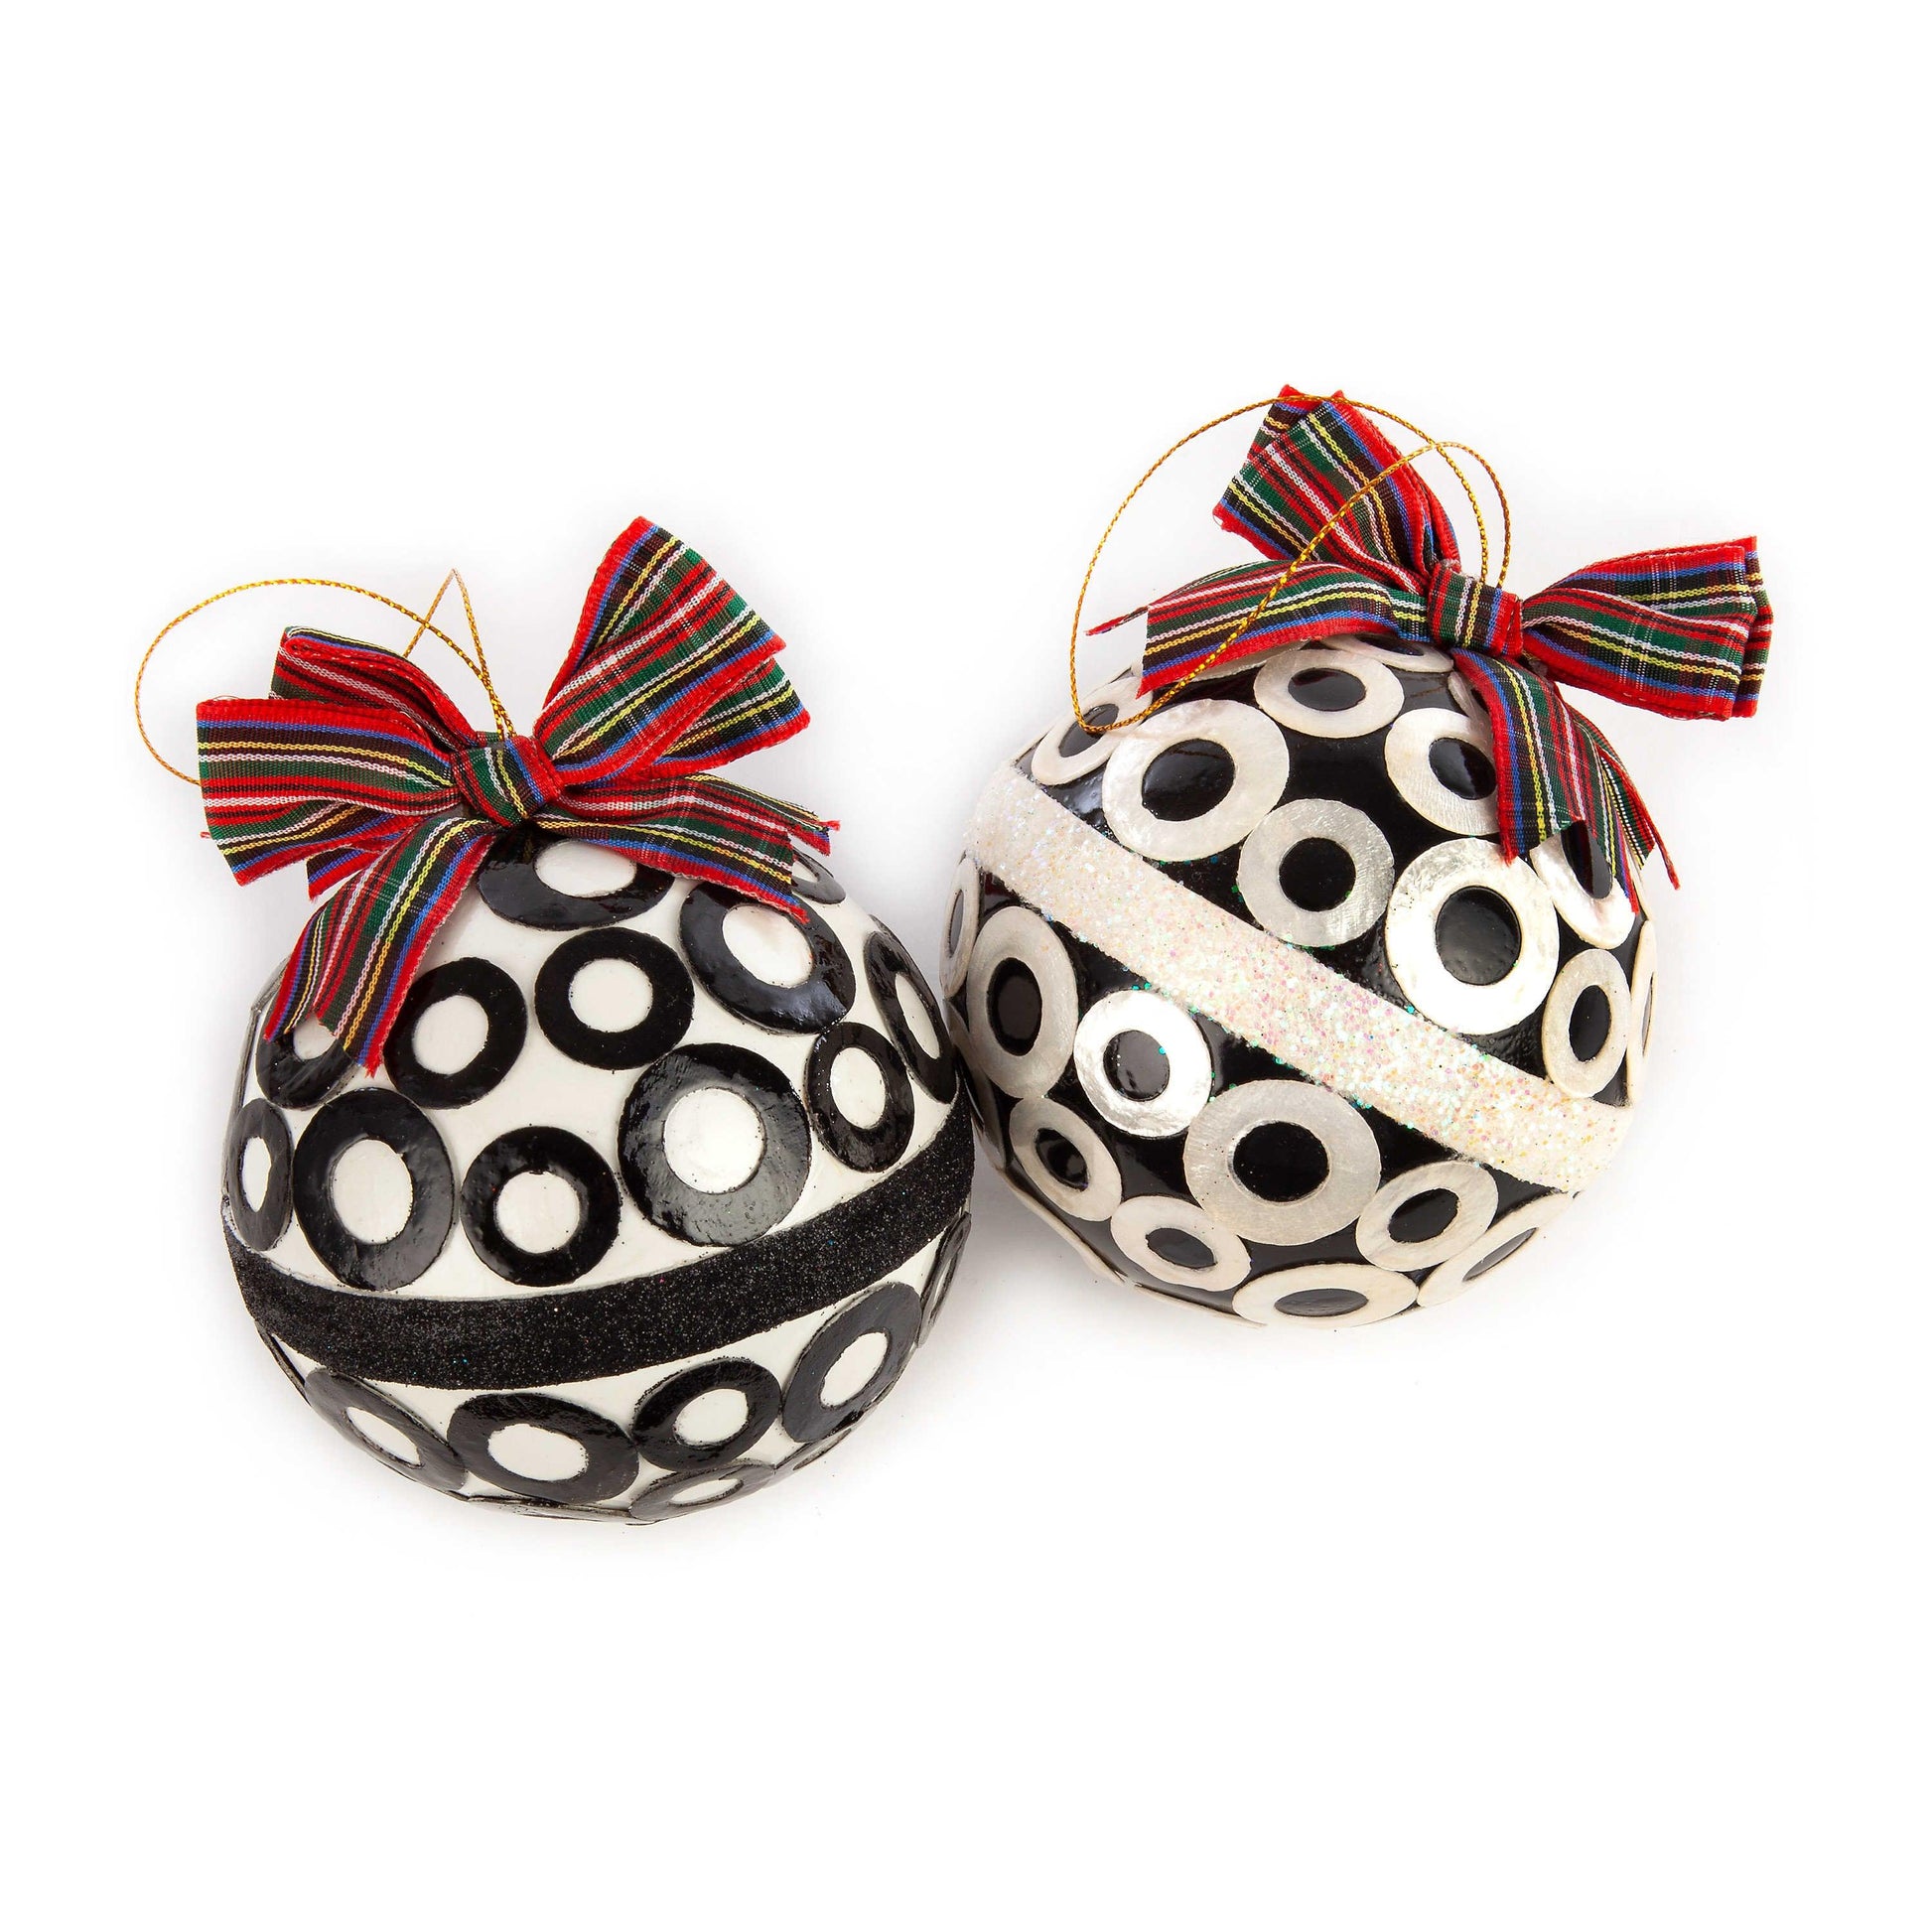 Mod Capiz Ball Ornaments - Set Of 2 (Mackenzie Childs) - Gallery Gifts Online 